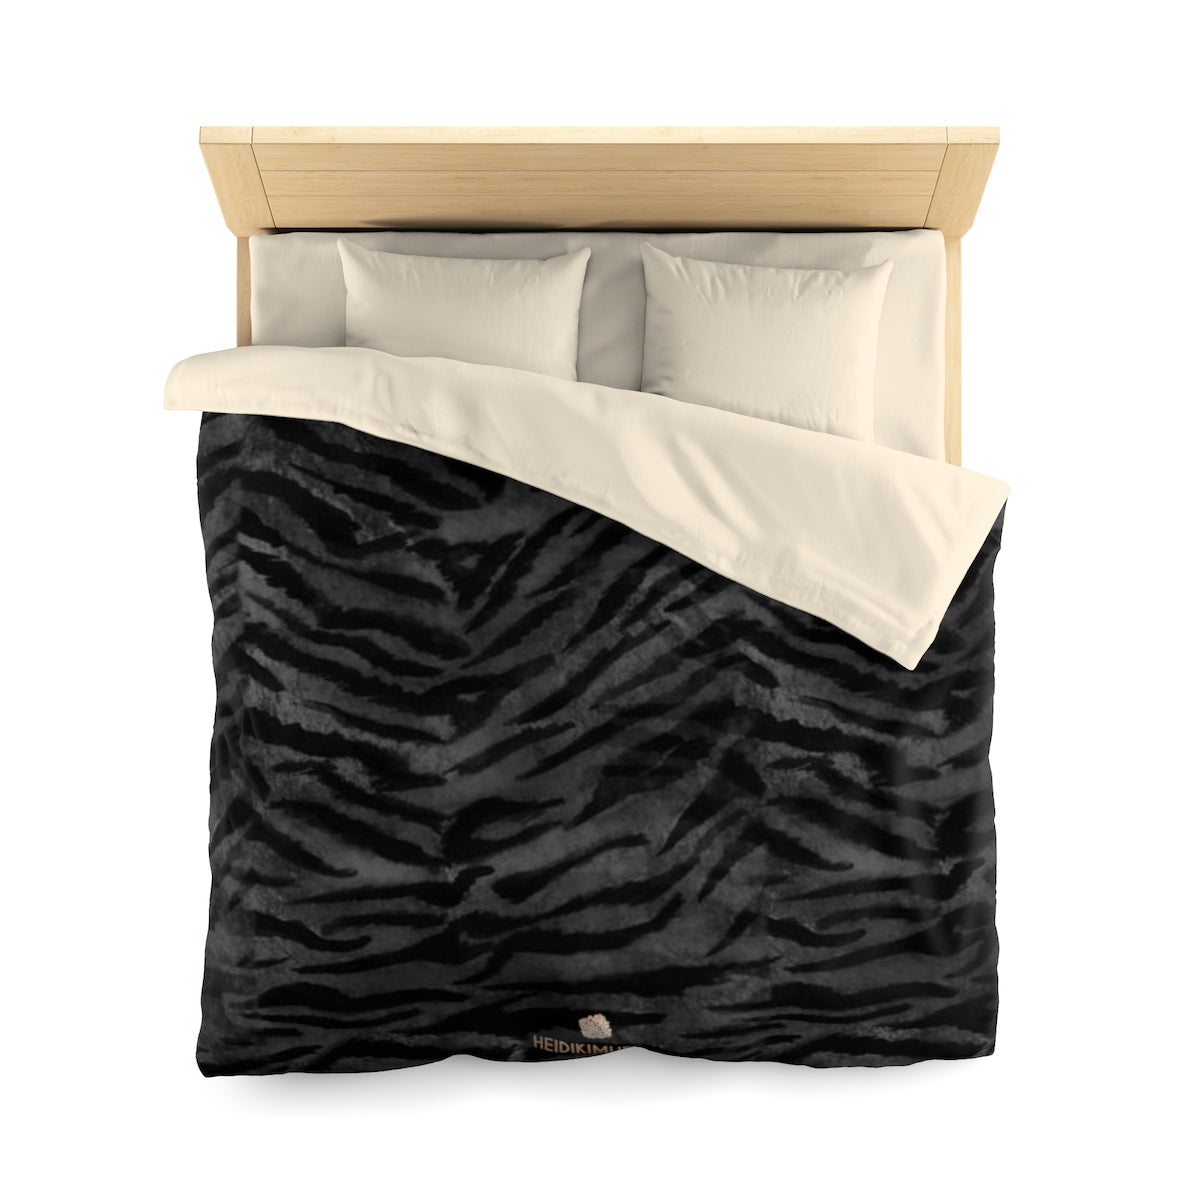 Black Tiger Stripe Duvet Cover Gray Animal Print Queen Twin Size